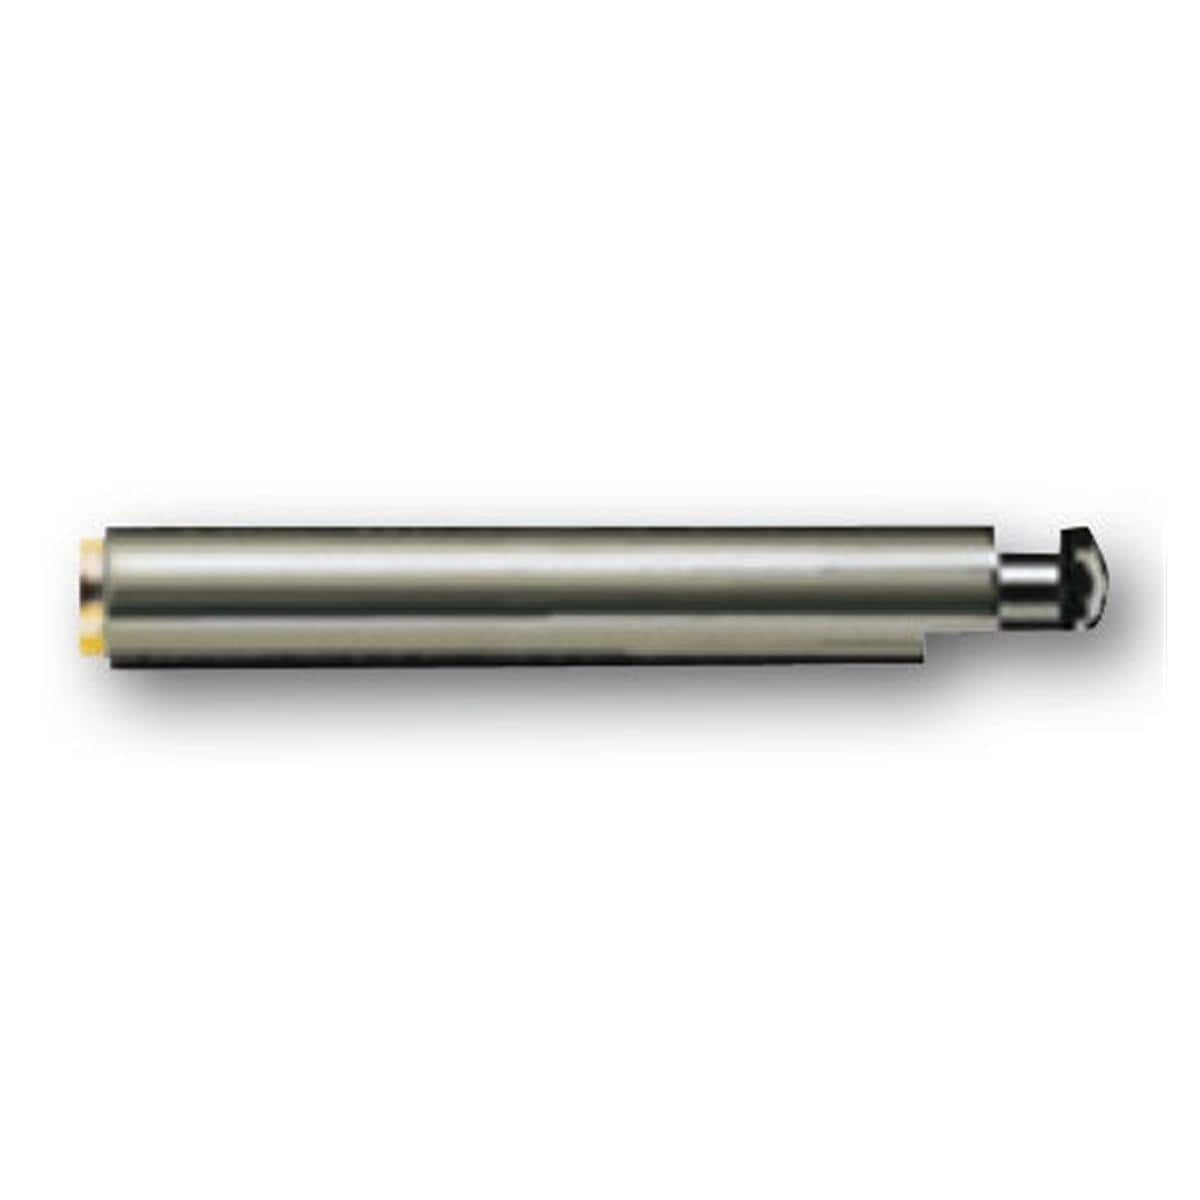 Hawe Prophy mandrin screw type - 1301 Mandrin, fixation  vis, CA, 14 mm, 10 pcs